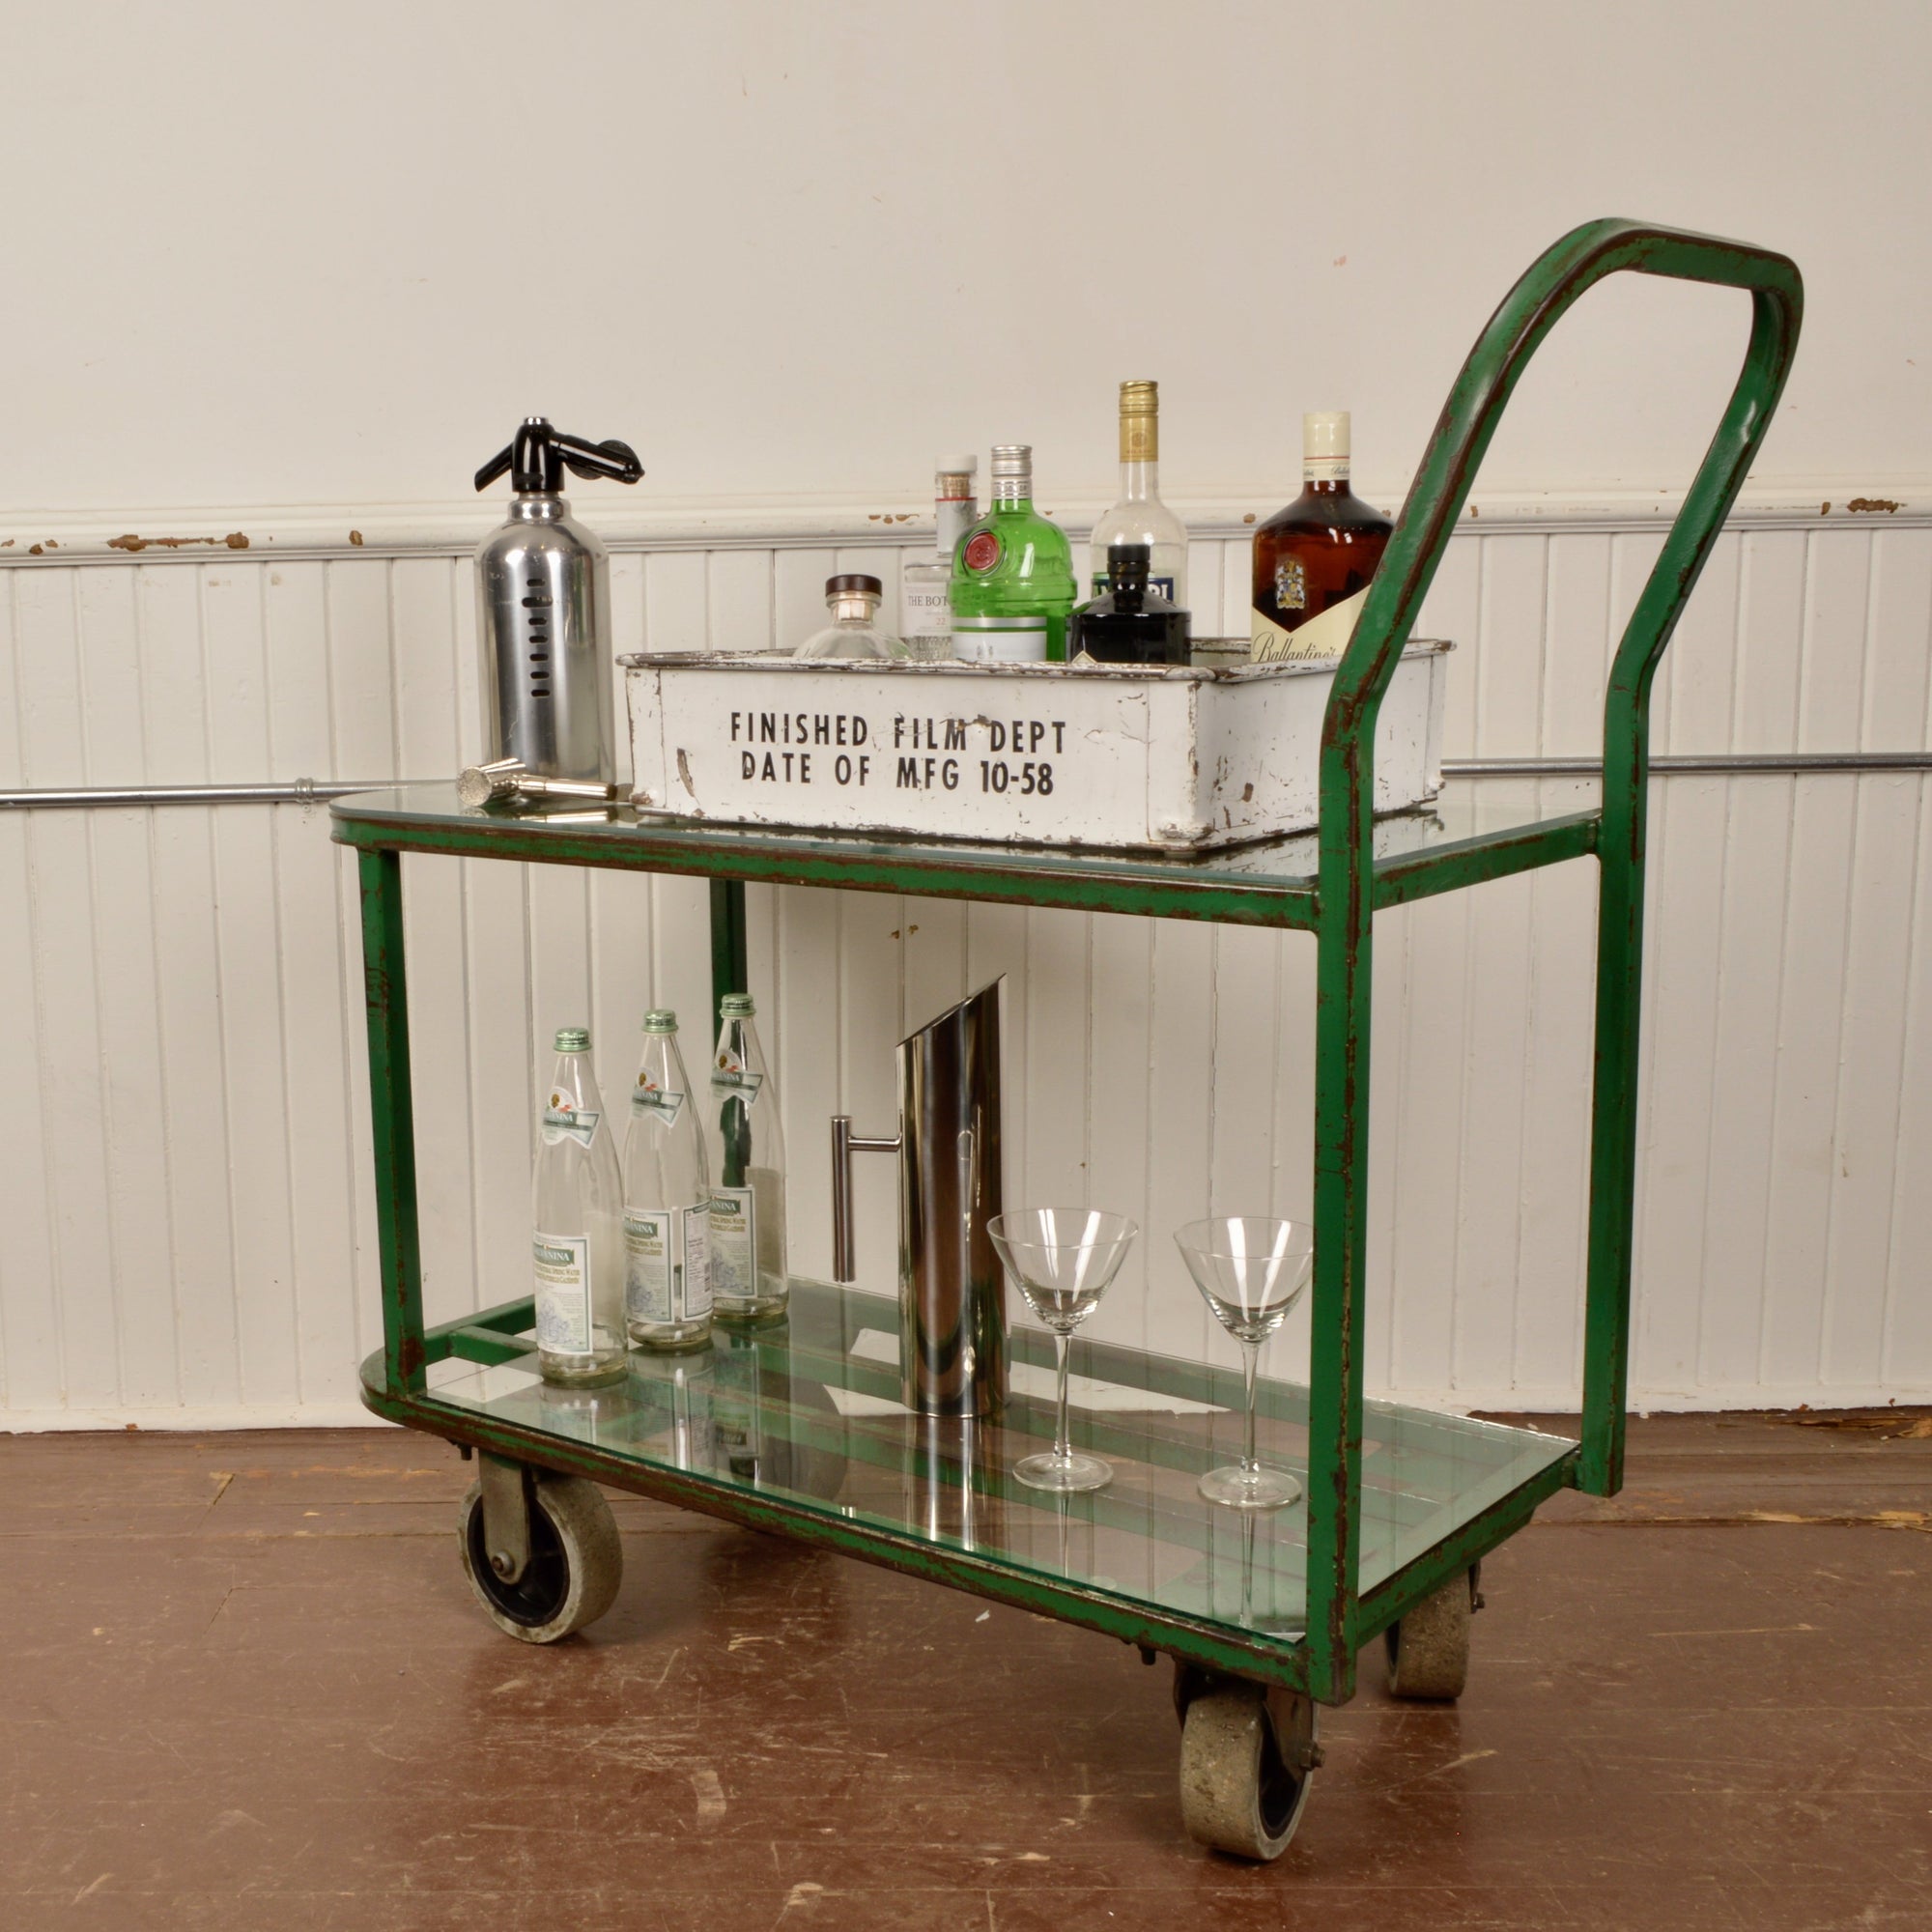 Vintage Steel Industrial Rolling Cart w. Glass Shelves Salvage-Garden